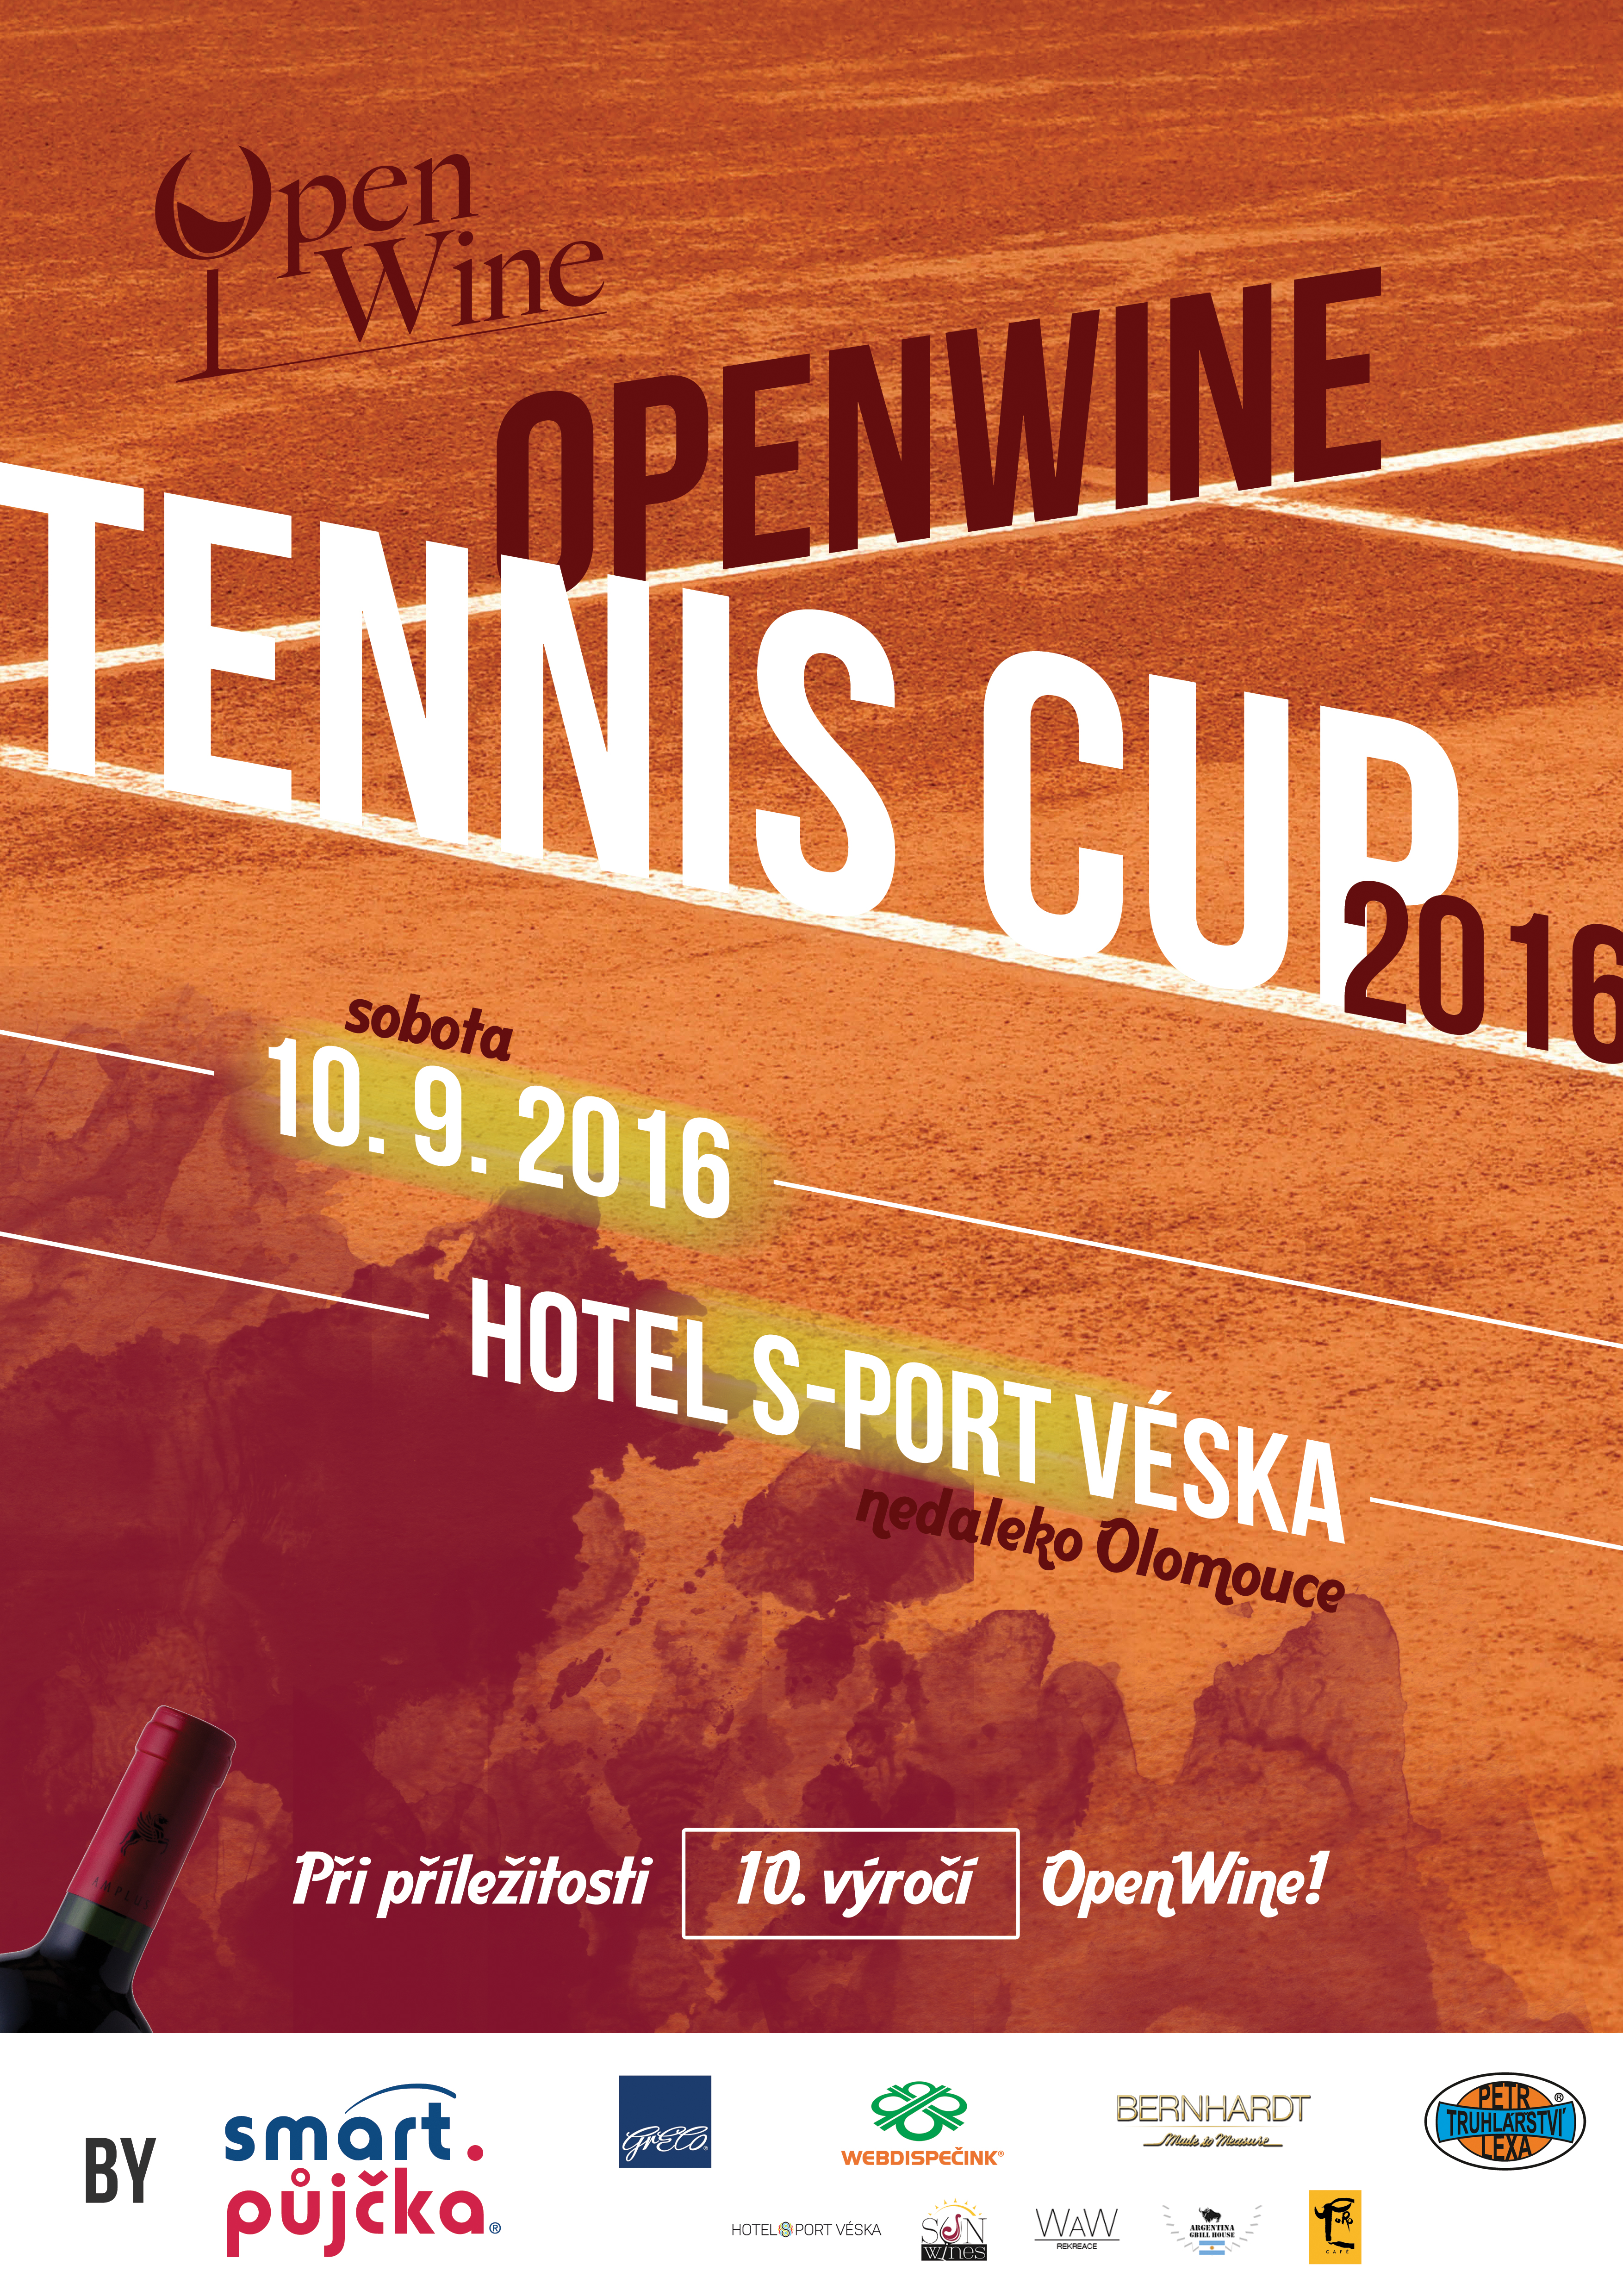 OpenWine Tennis Cup 2016 plakát